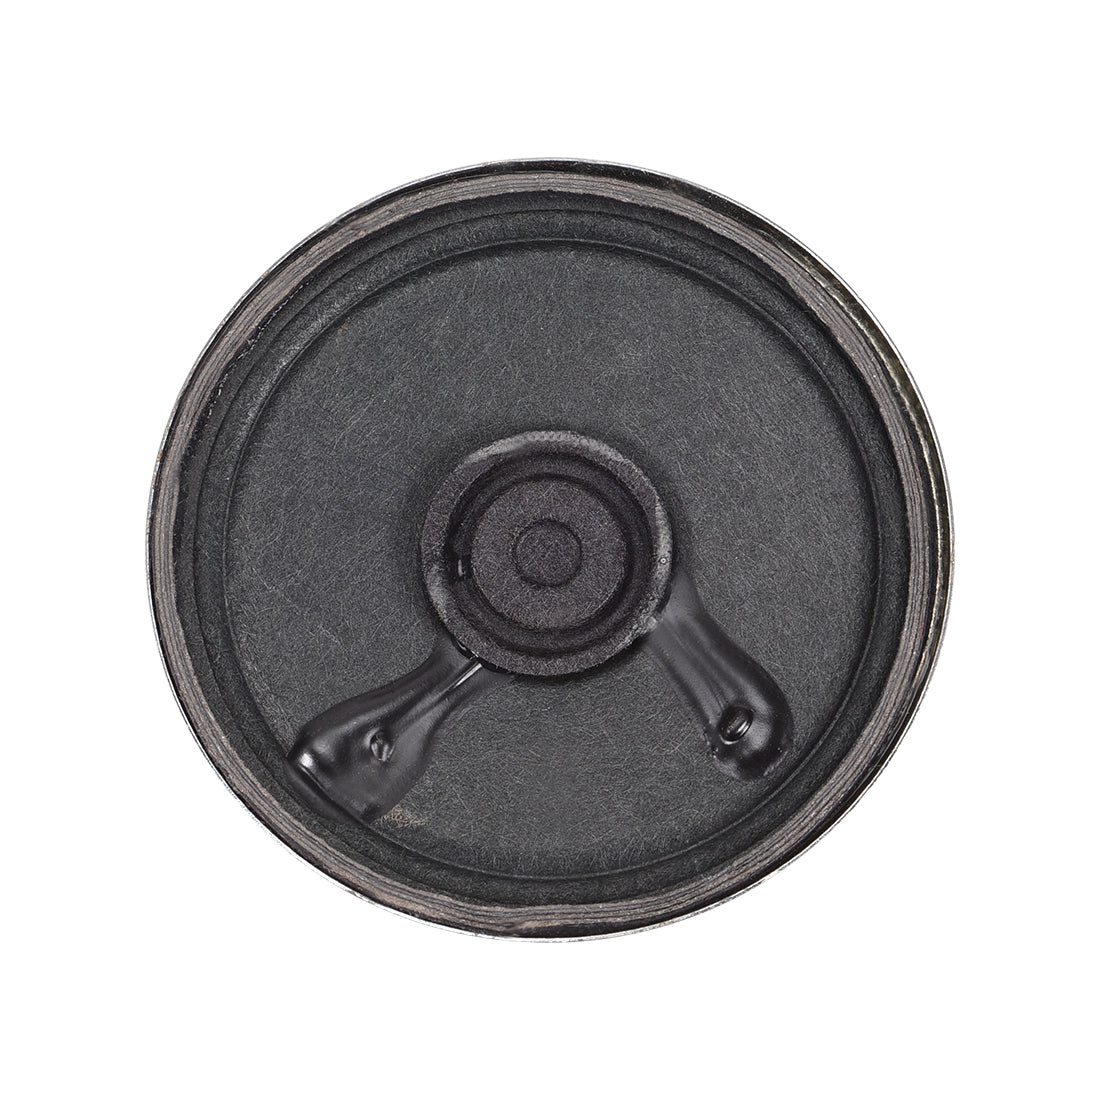 uxcell Uxcell 0.5W 8 Ohm Micro Internal Speaker Magnet Loudspeaker 50mm Dia